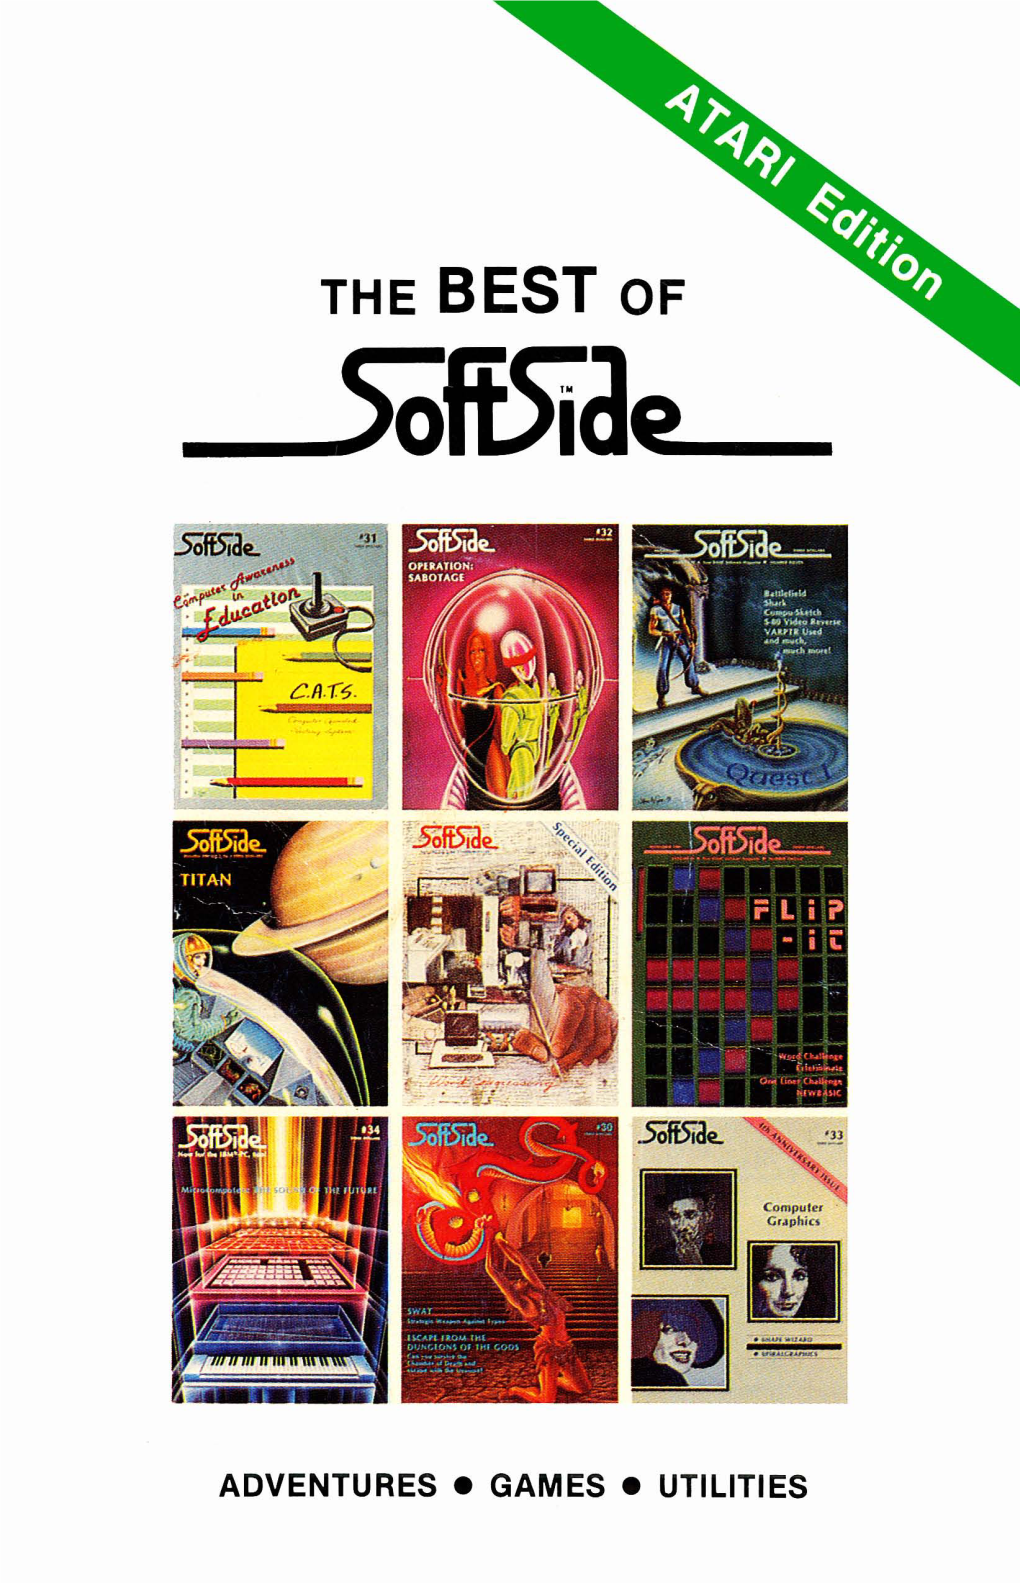 Best of Softside Atari Edition.Pdf